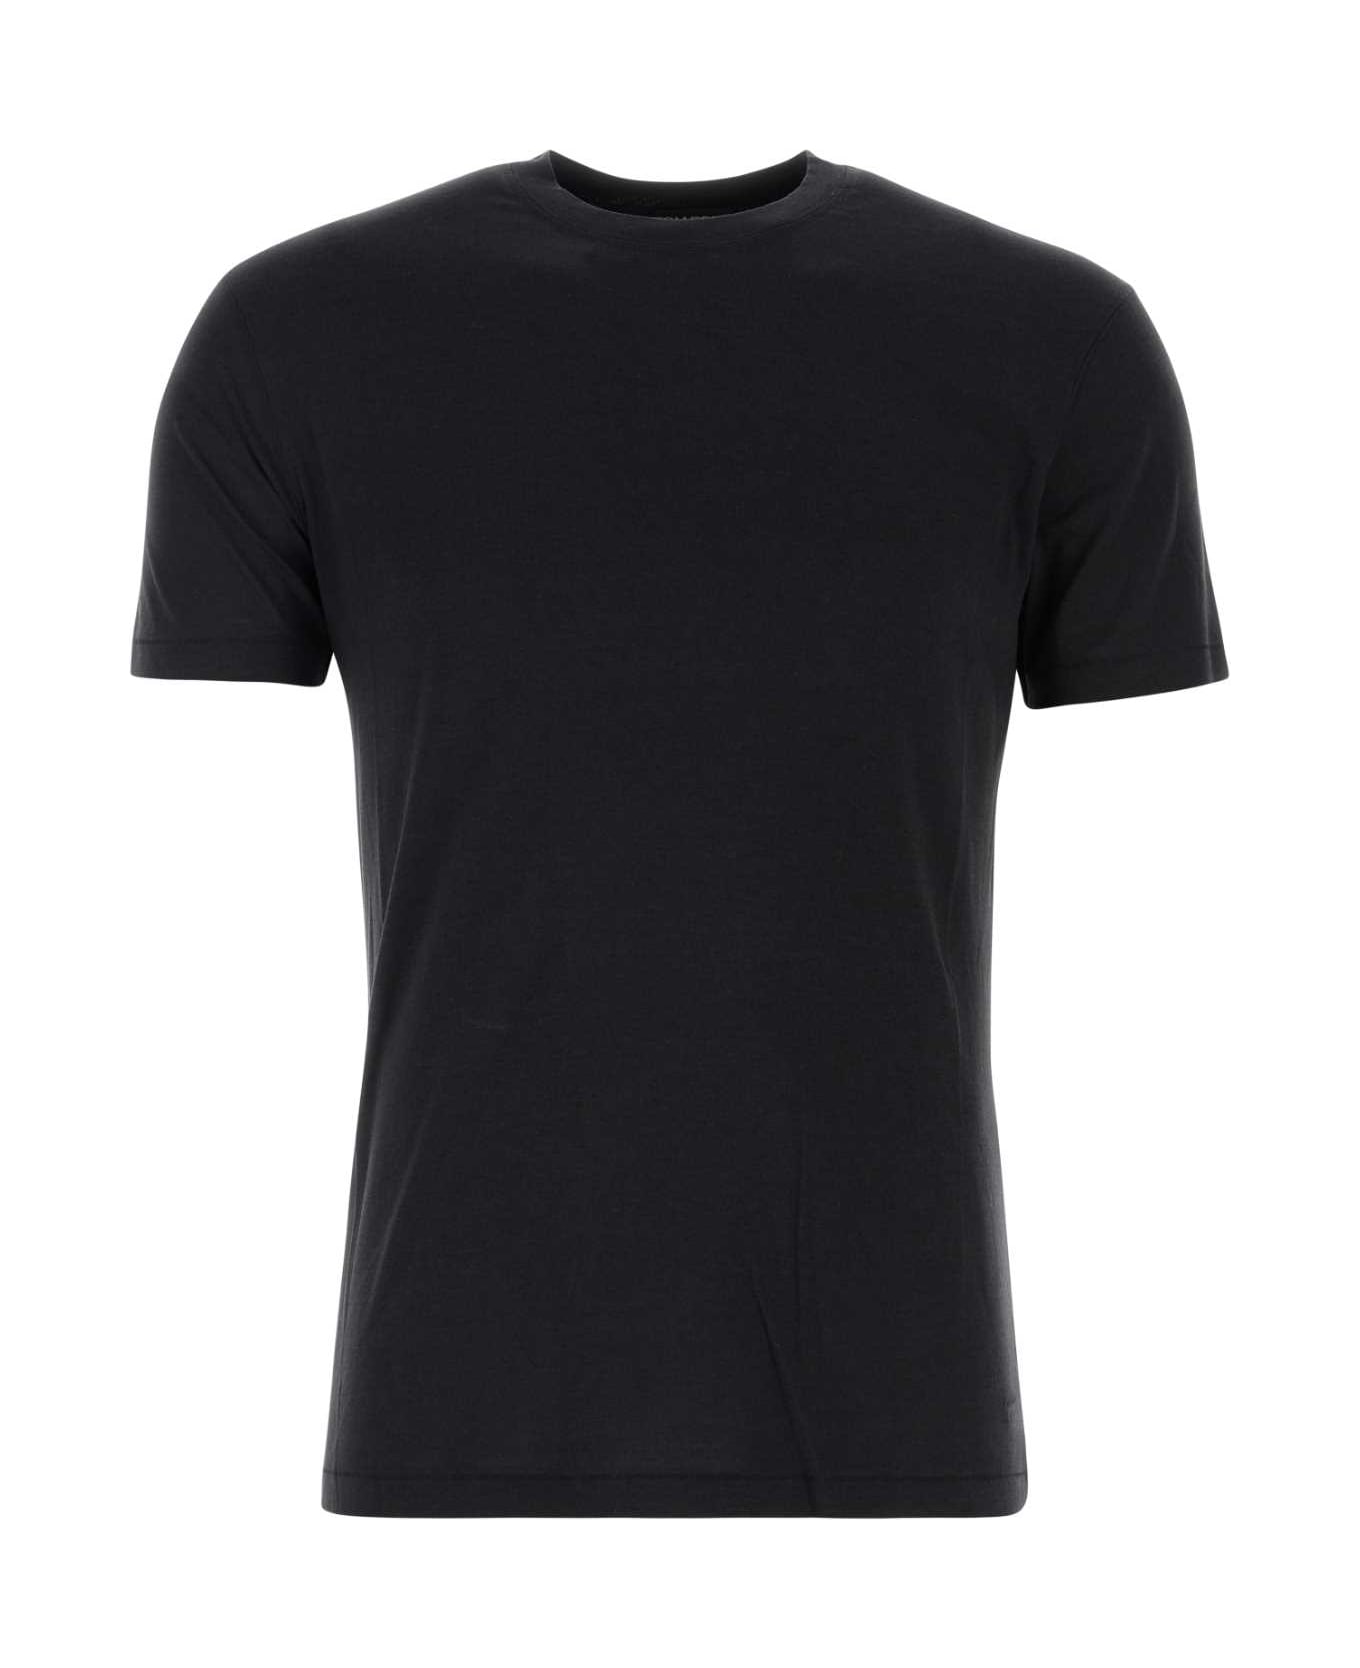 Tom Ford Black Lyocell Blend T-shirt - LB999 シャツ